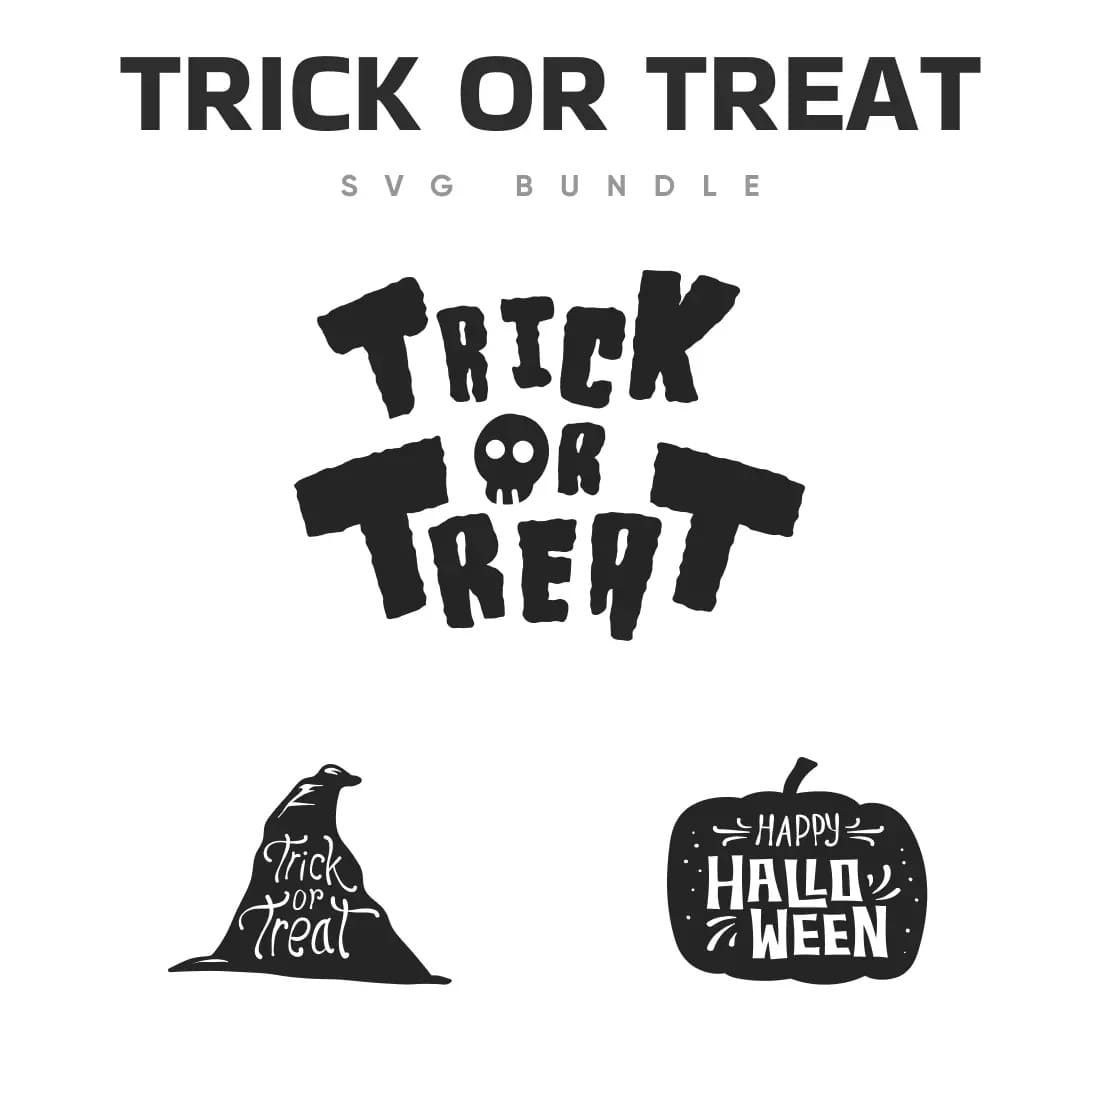 Trick Or Treat SVG Bundle Preview 1.